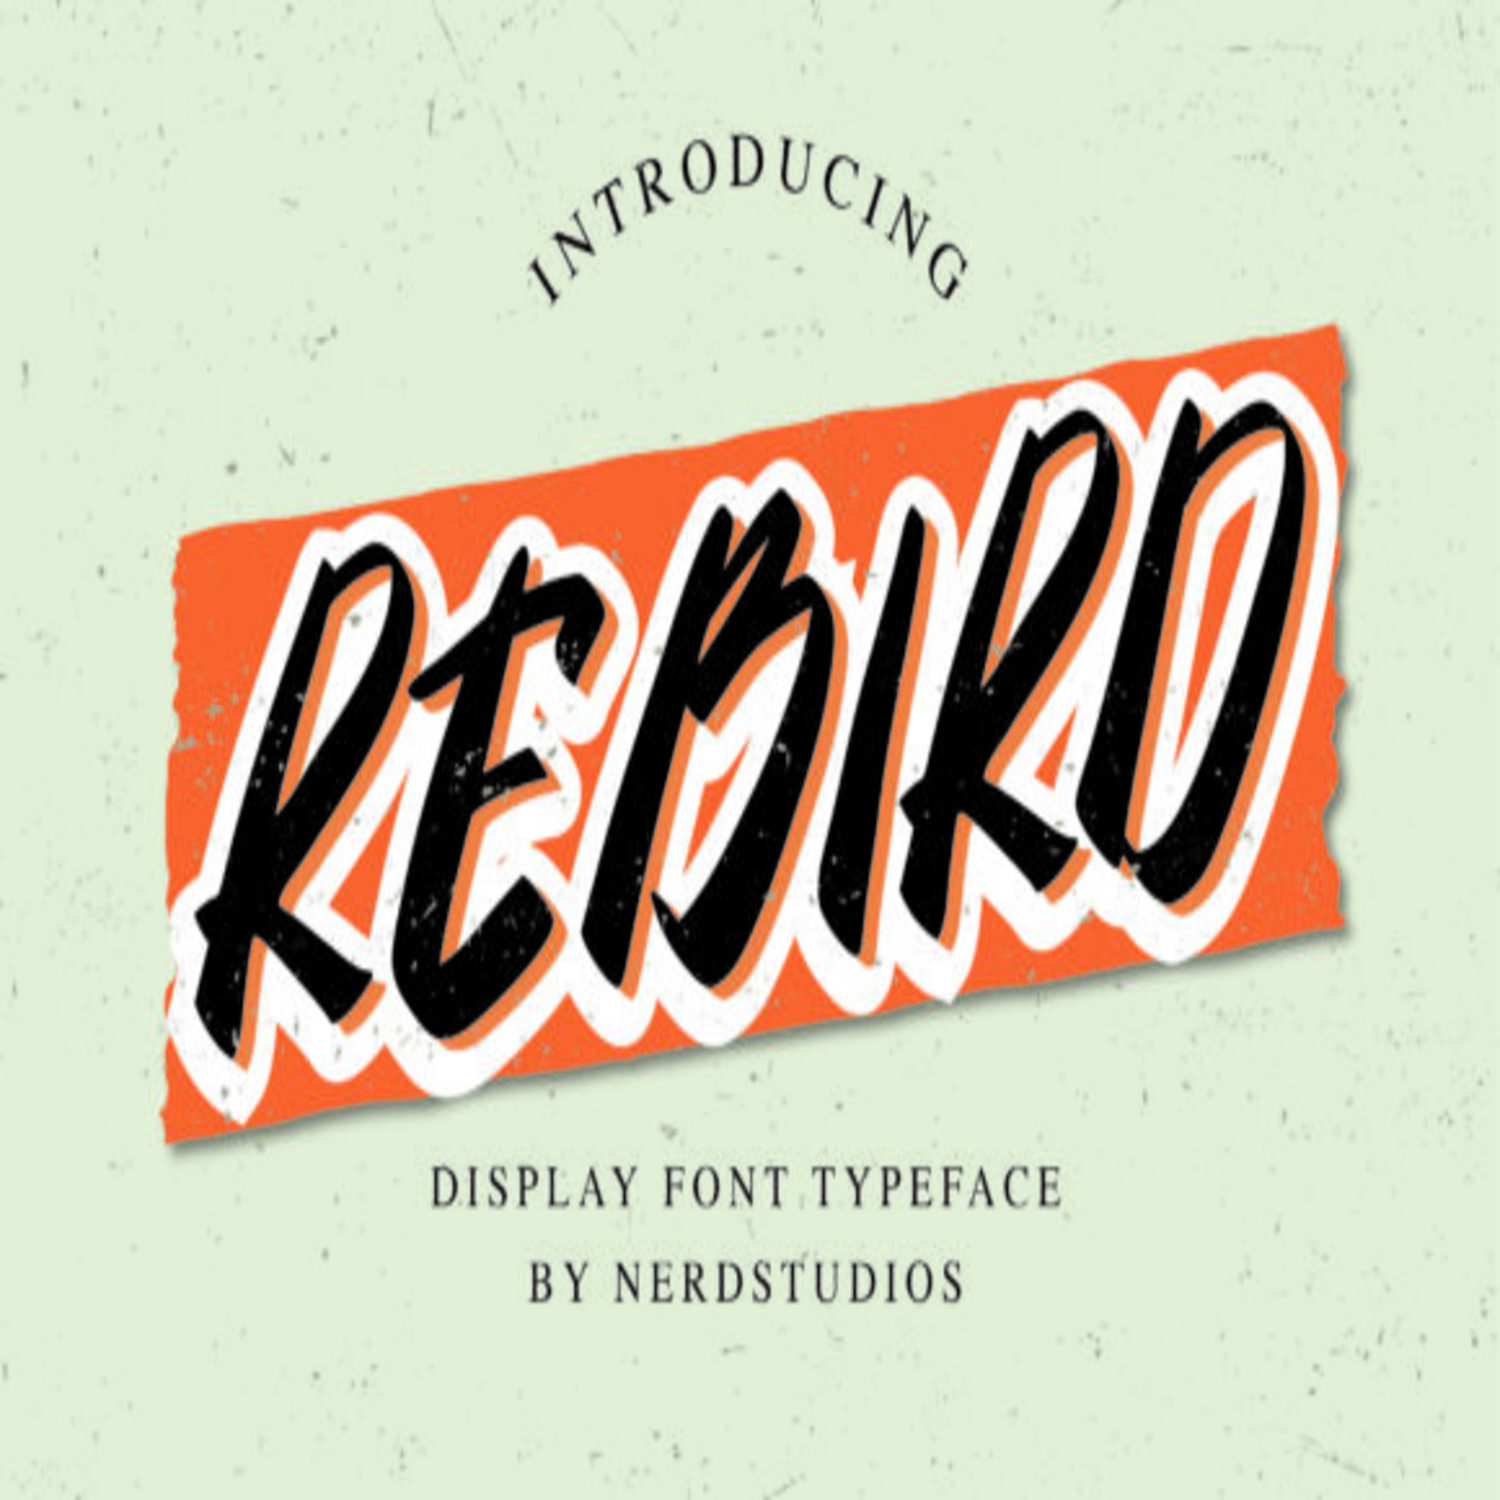 Rebird Fonts main cover.